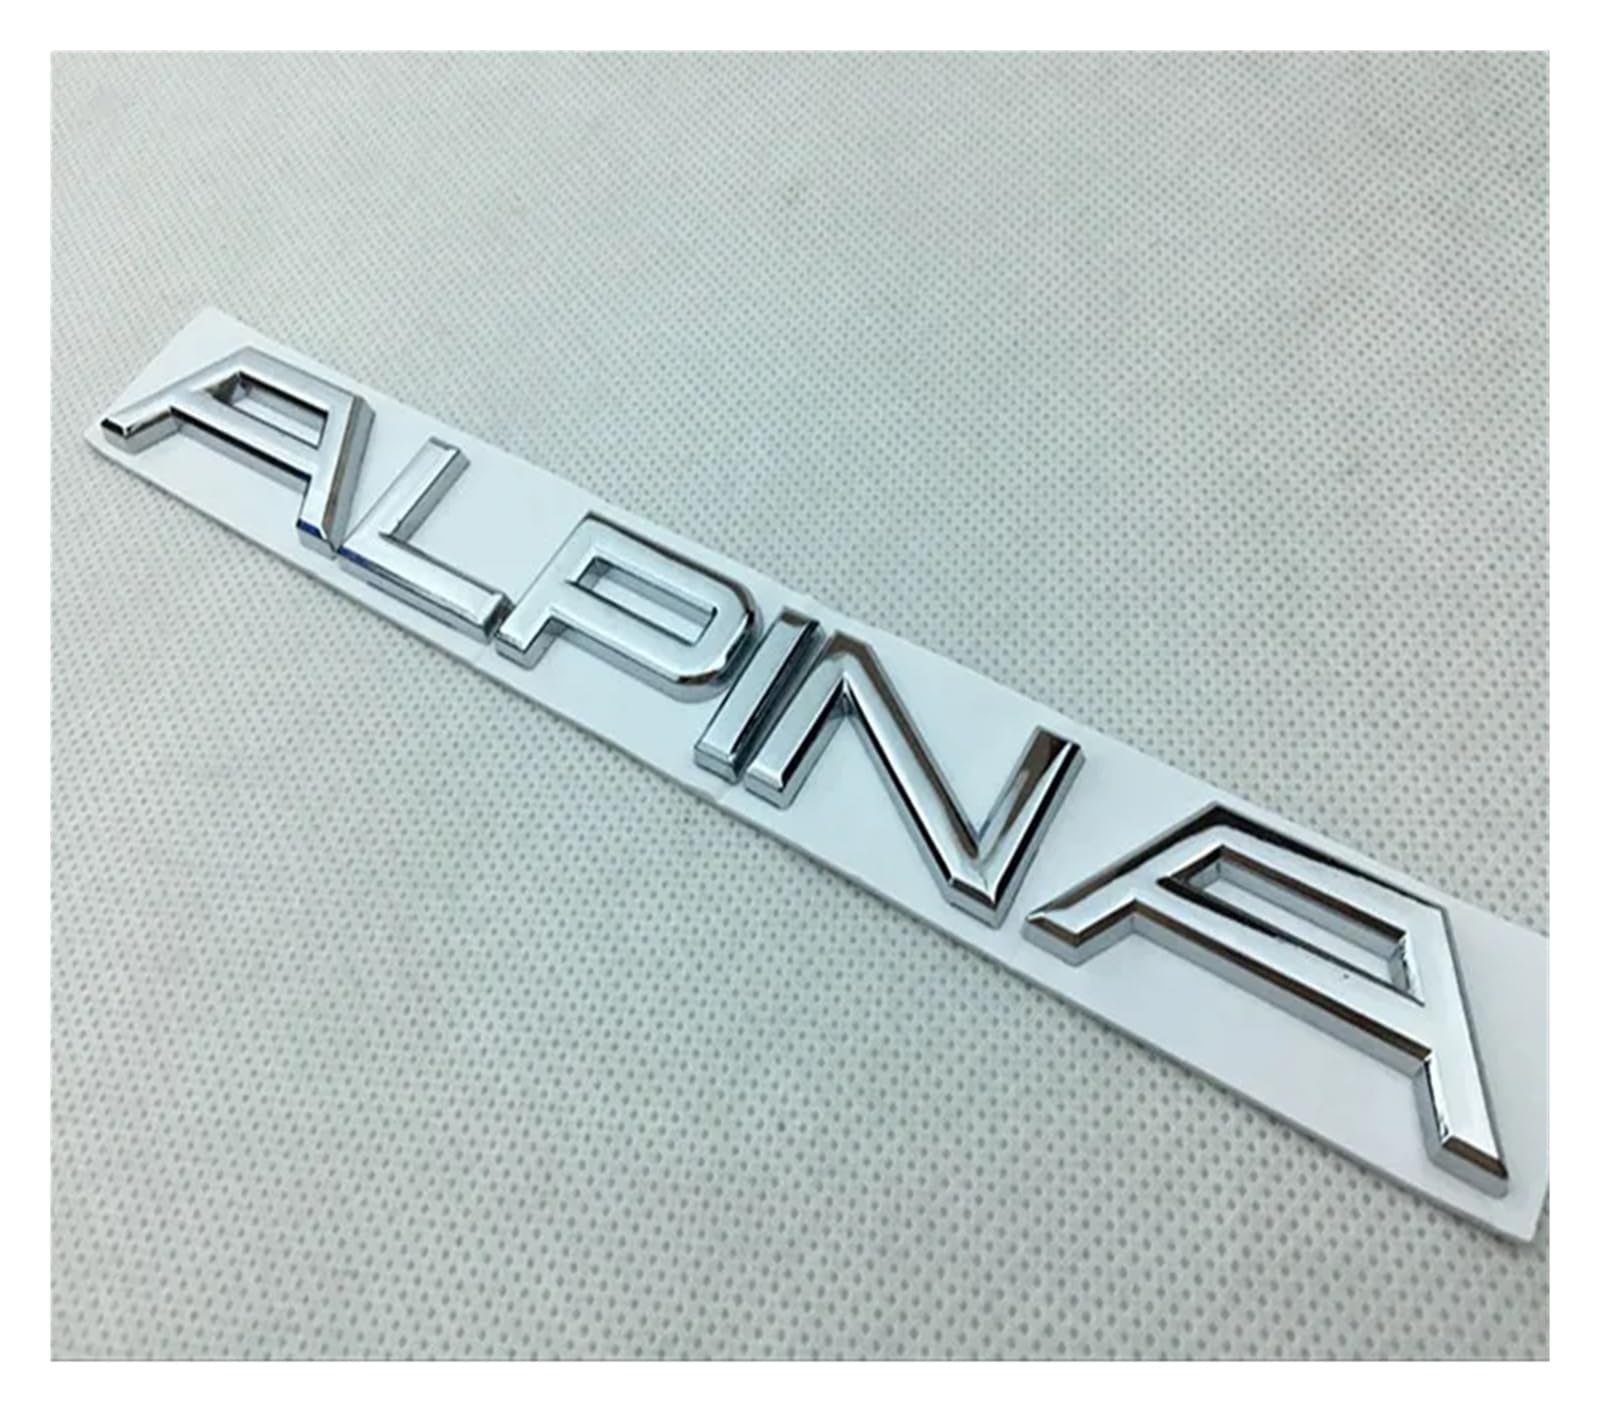 yzw6688 1X Metall-Alpina-Buchstaben-Emblem-Aufkleber for den Kofferraum hinten, kompatibel mit E46 E60 E90 E36 E53 E30 E34 F10 F30 1 3 5 7 Auto-Stying-Aufkleber (Color : Chrome) von GerRit